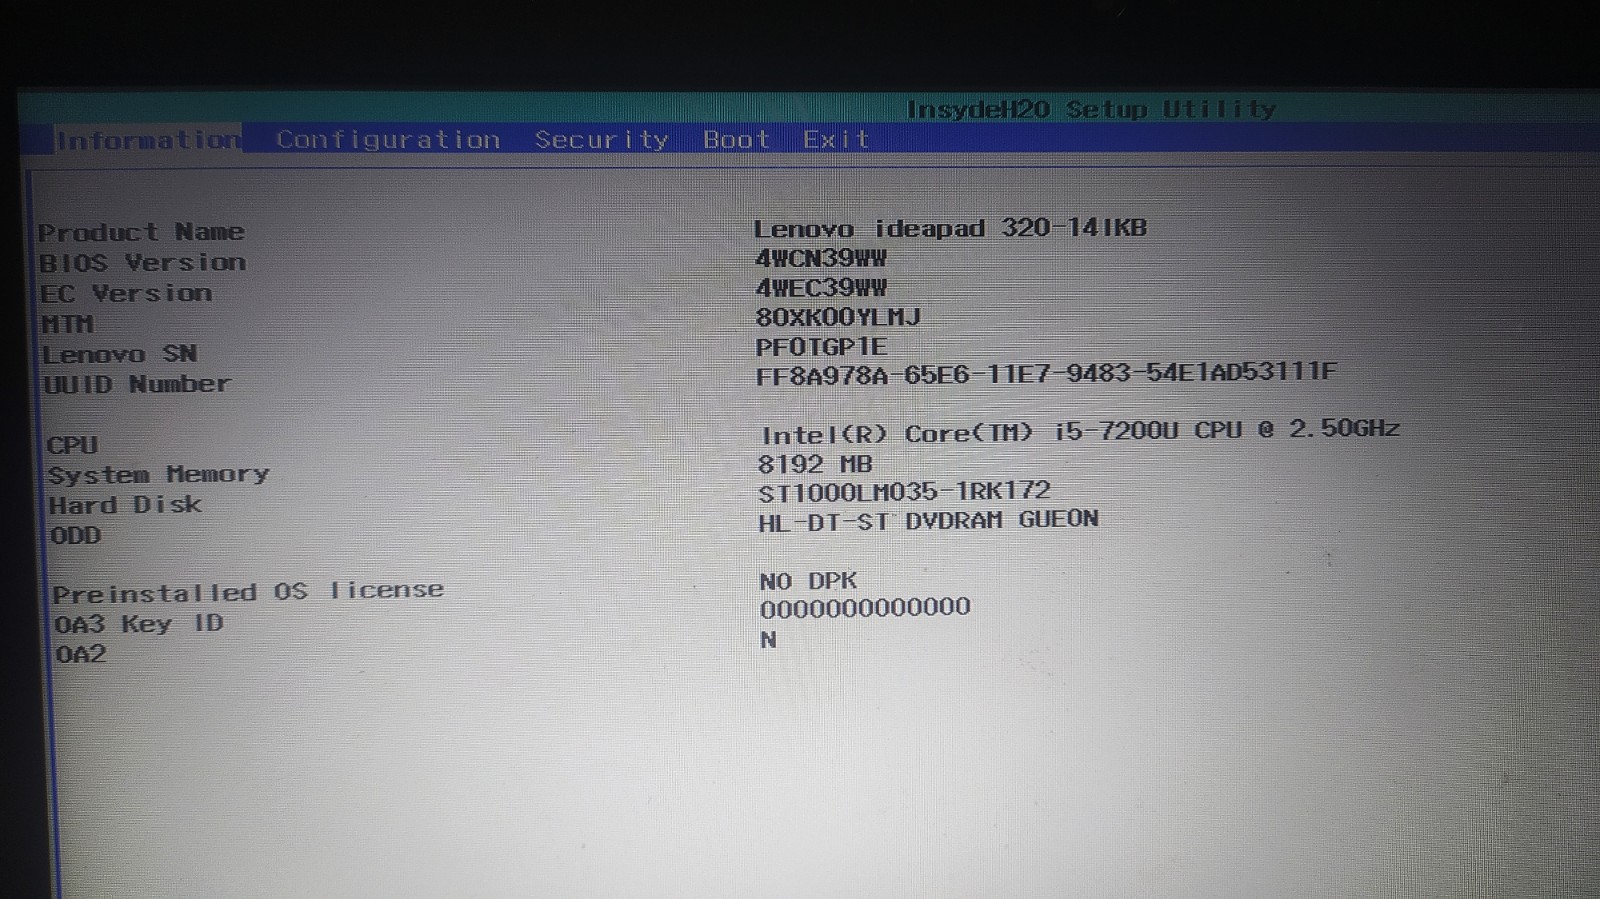 Lenovo-ideapad-320-14lkb-replace-cd-drive-with-ssd - English Community -  LENOVO COMMUNITY